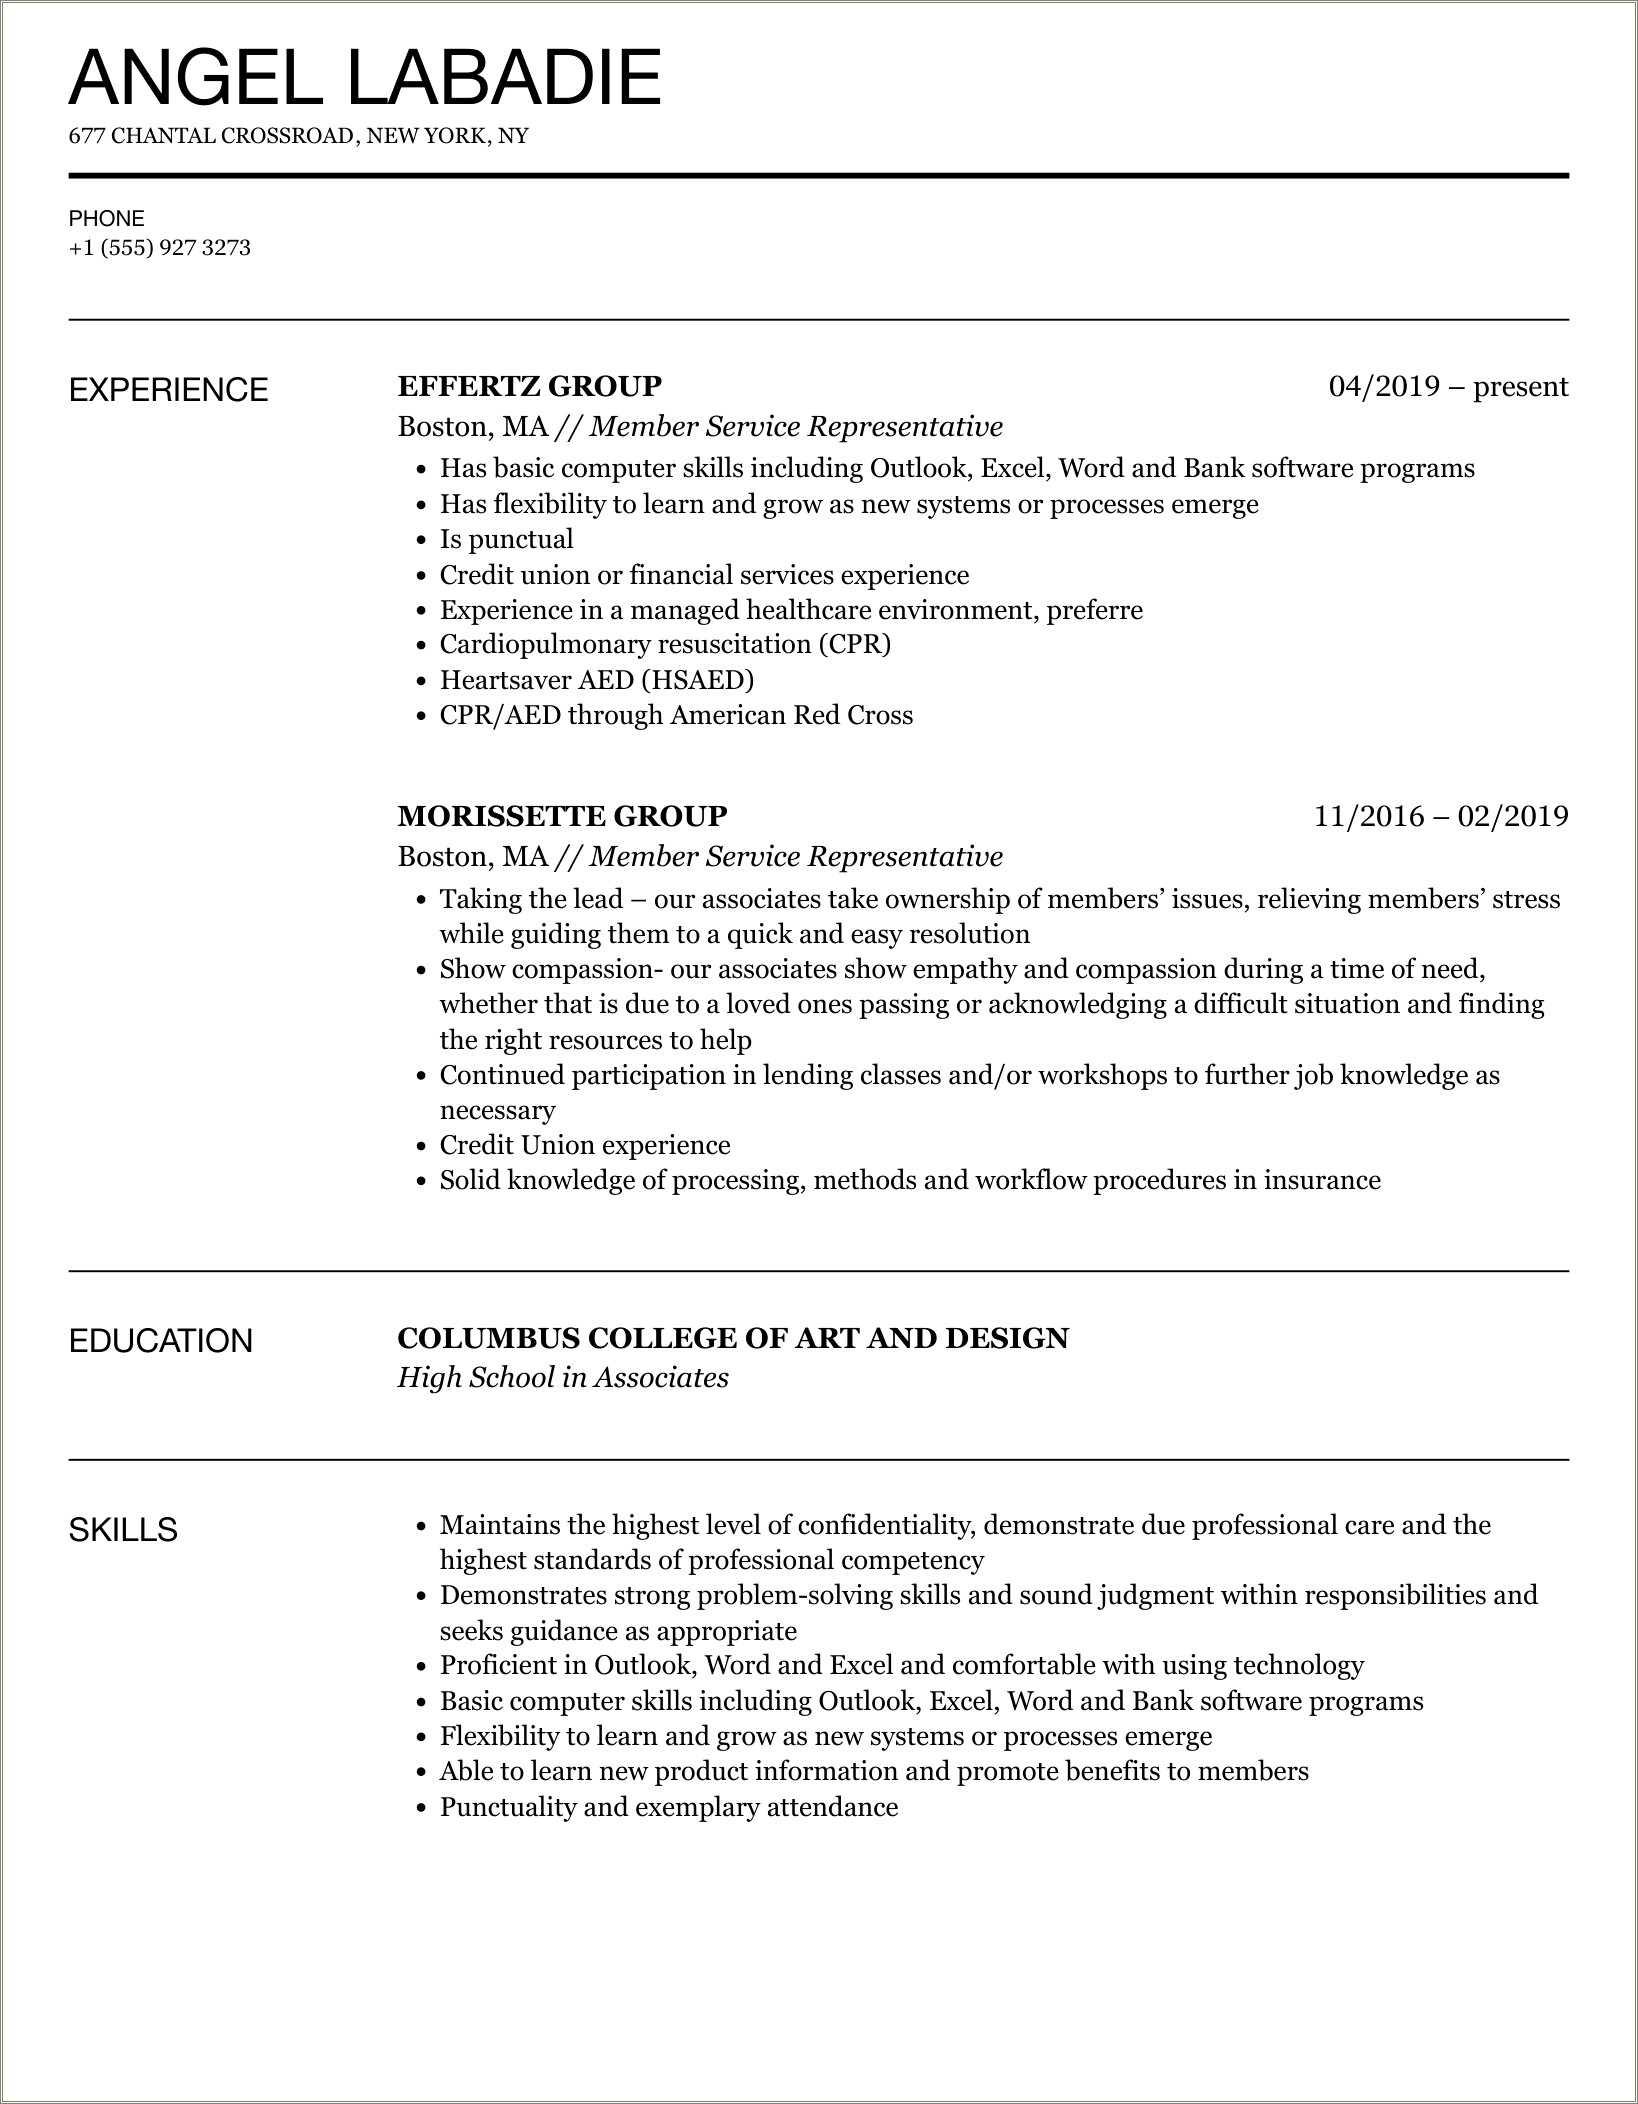 Resume Skills For Members Service Associate